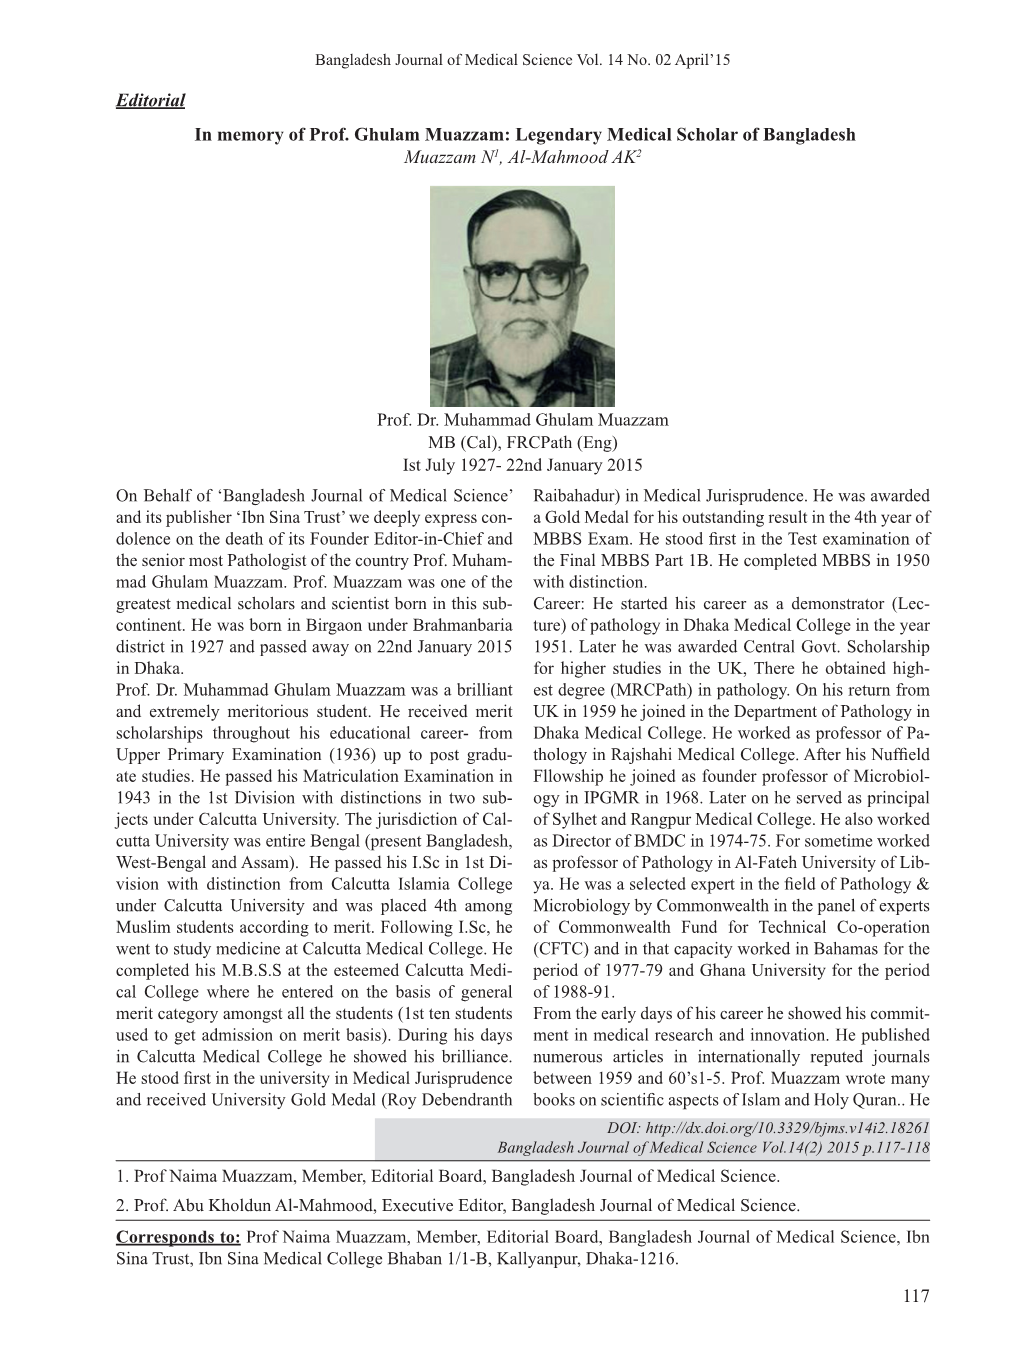 Editorial in Memory of Prof. Ghulam Muazzam: Legendary Medical Scholar of Bangladesh Muazzam N1, Al-Mahmood AK2